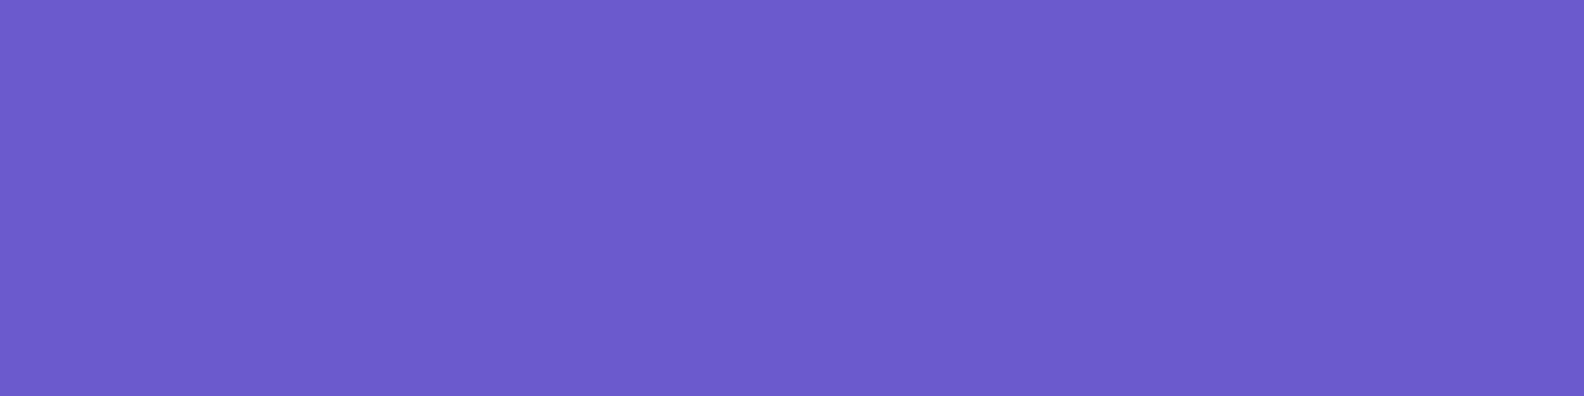 1584x396 Slate Blue Solid Color Background